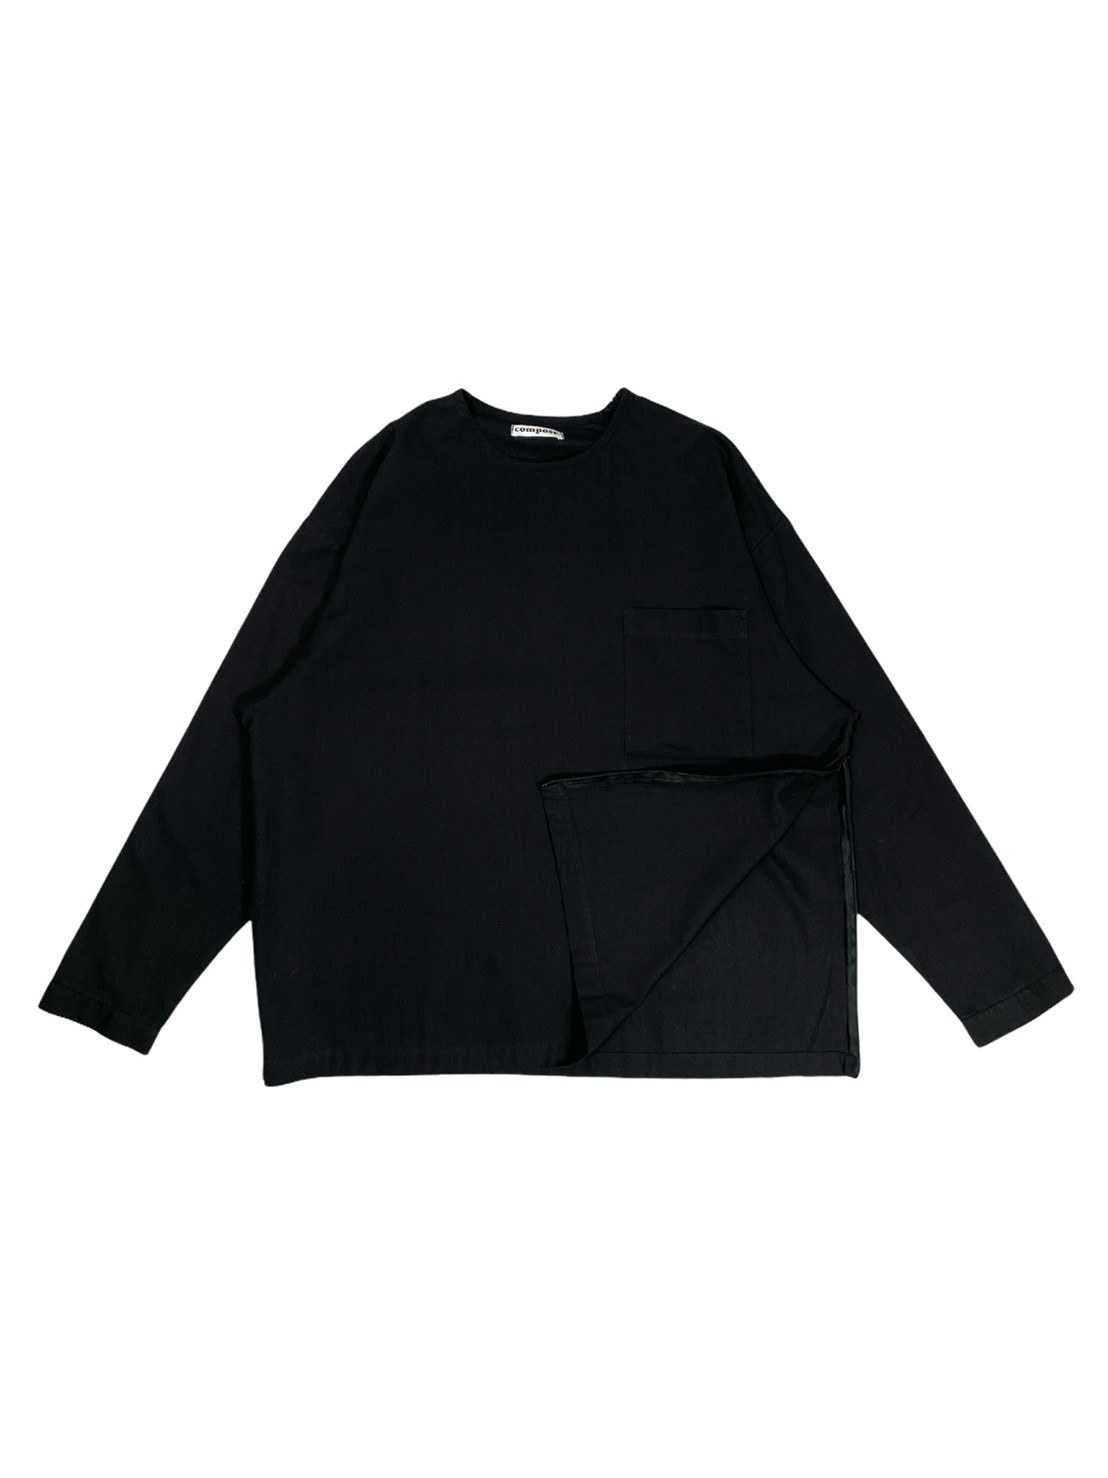 Summer Sided Zip-Up Shirt (Black)